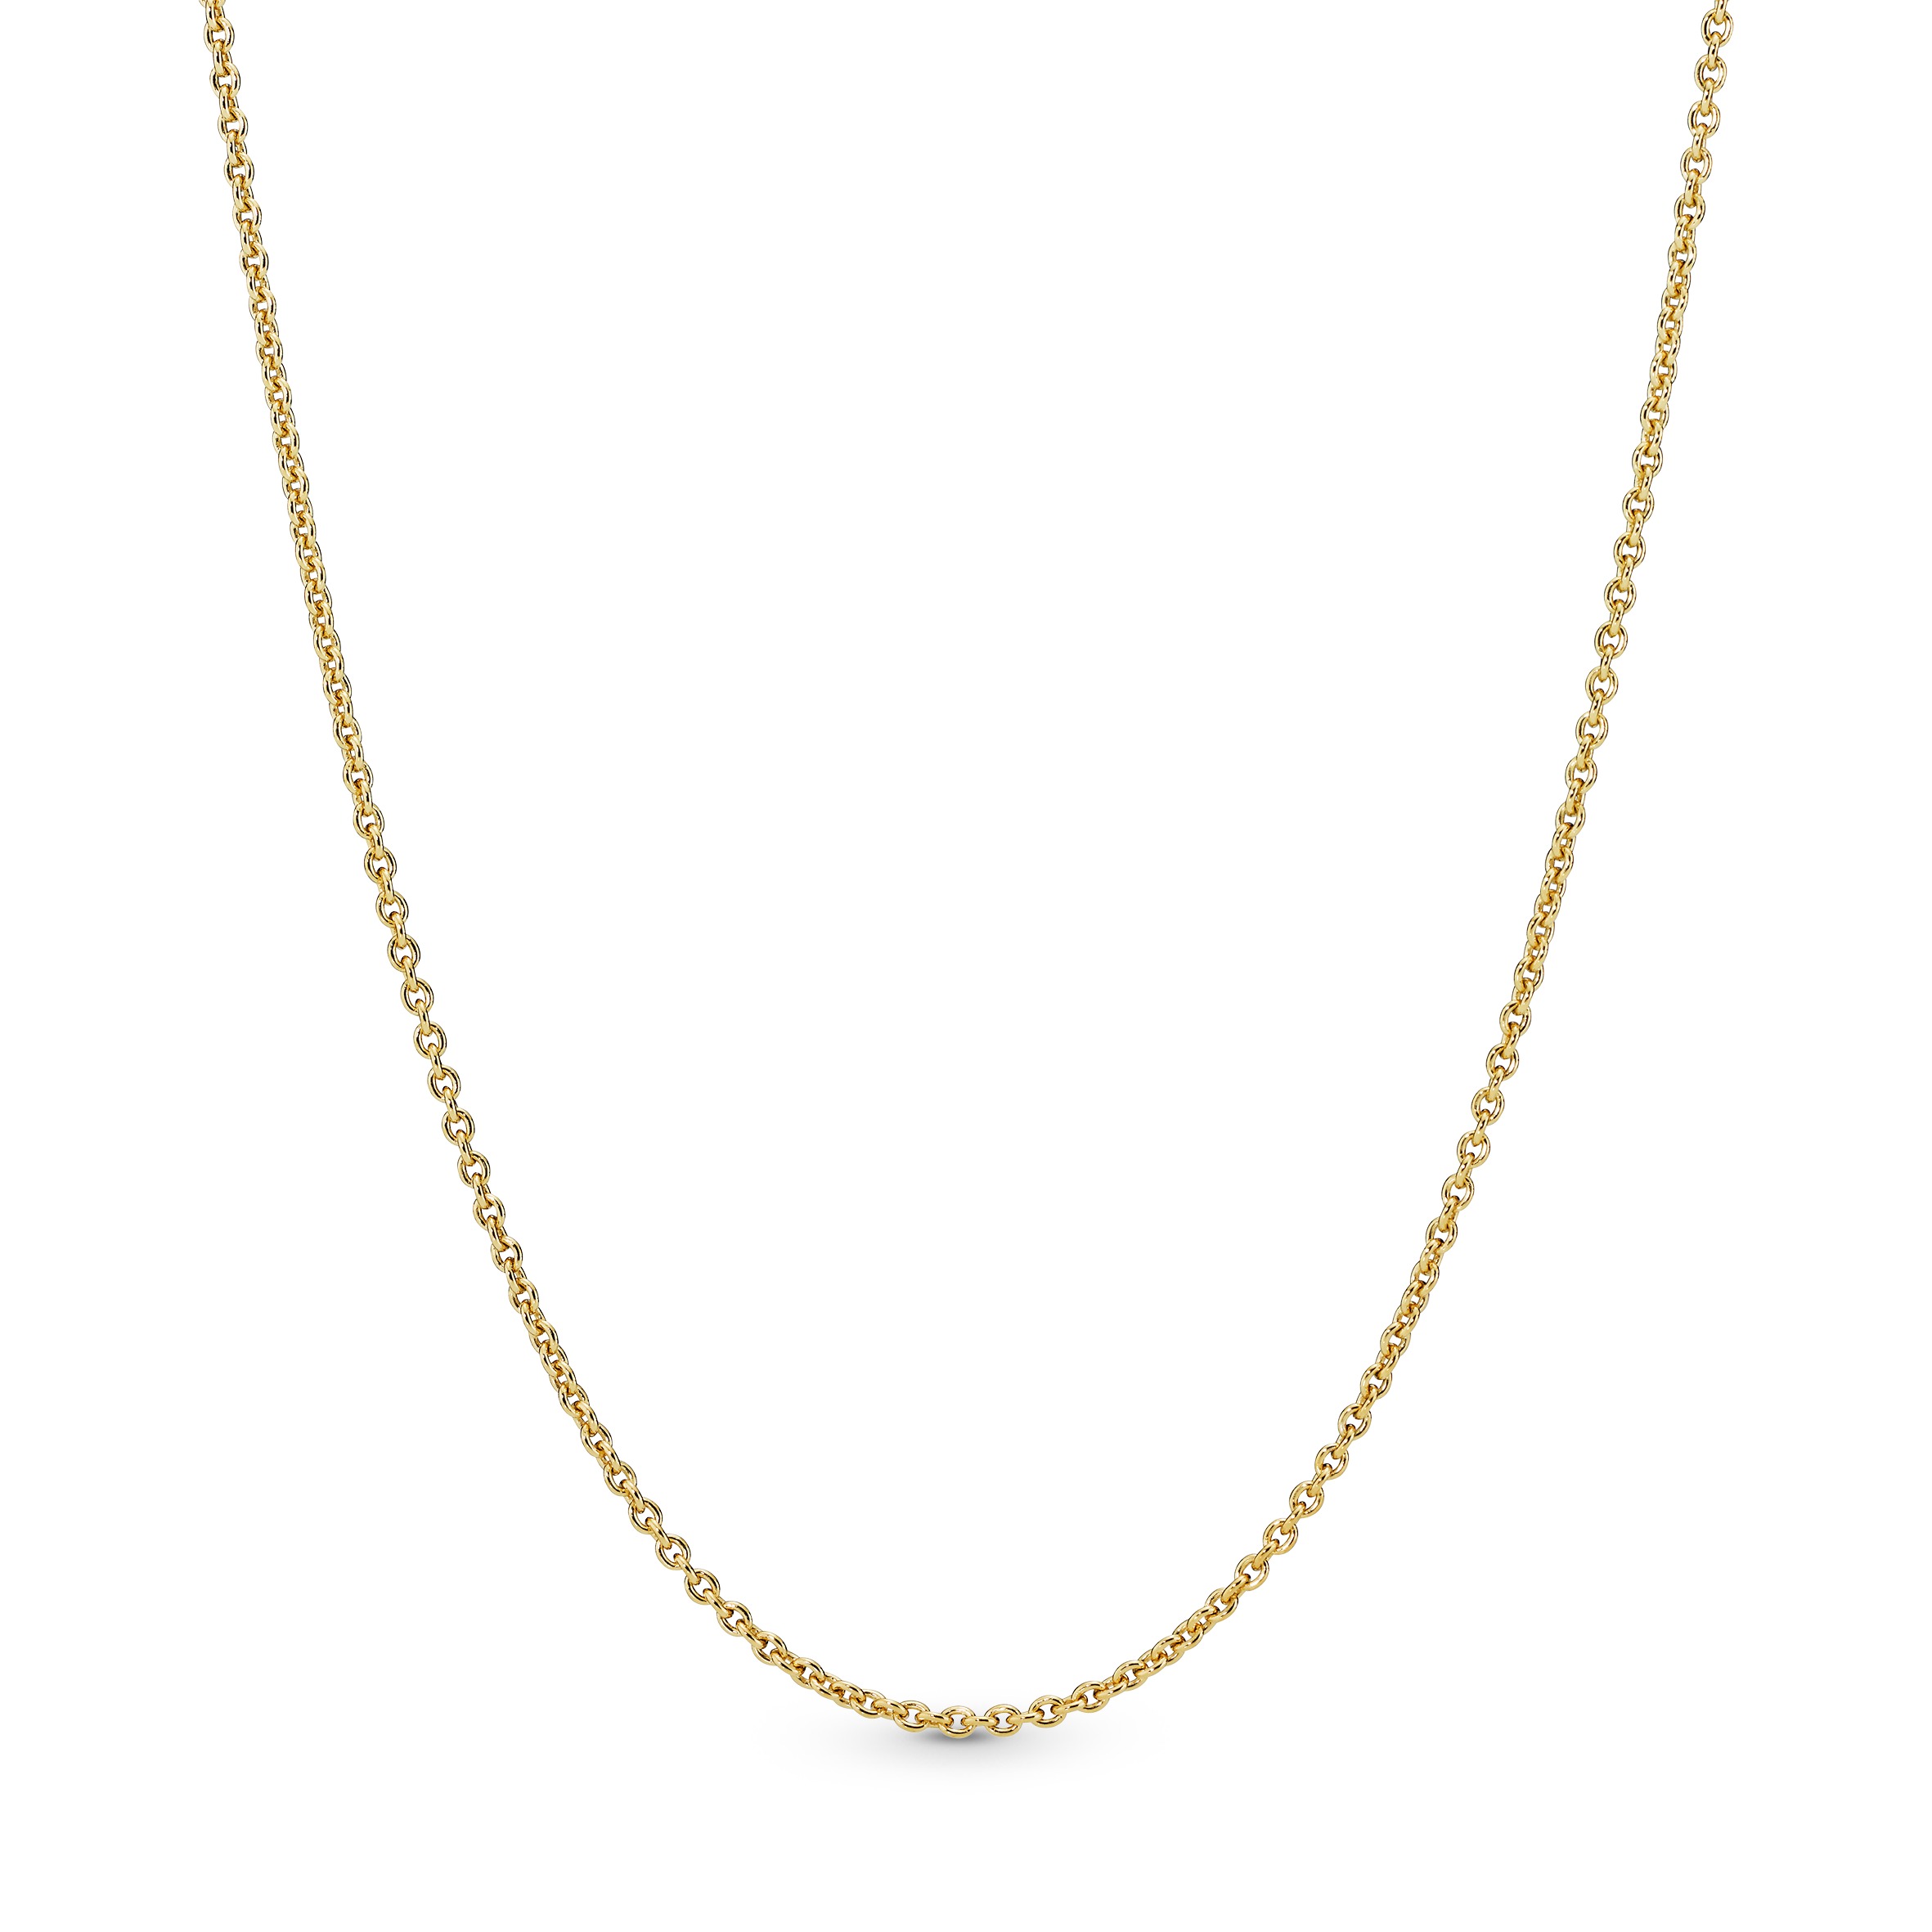 PANDORA Halskette 14k gold plated 368727C00-45